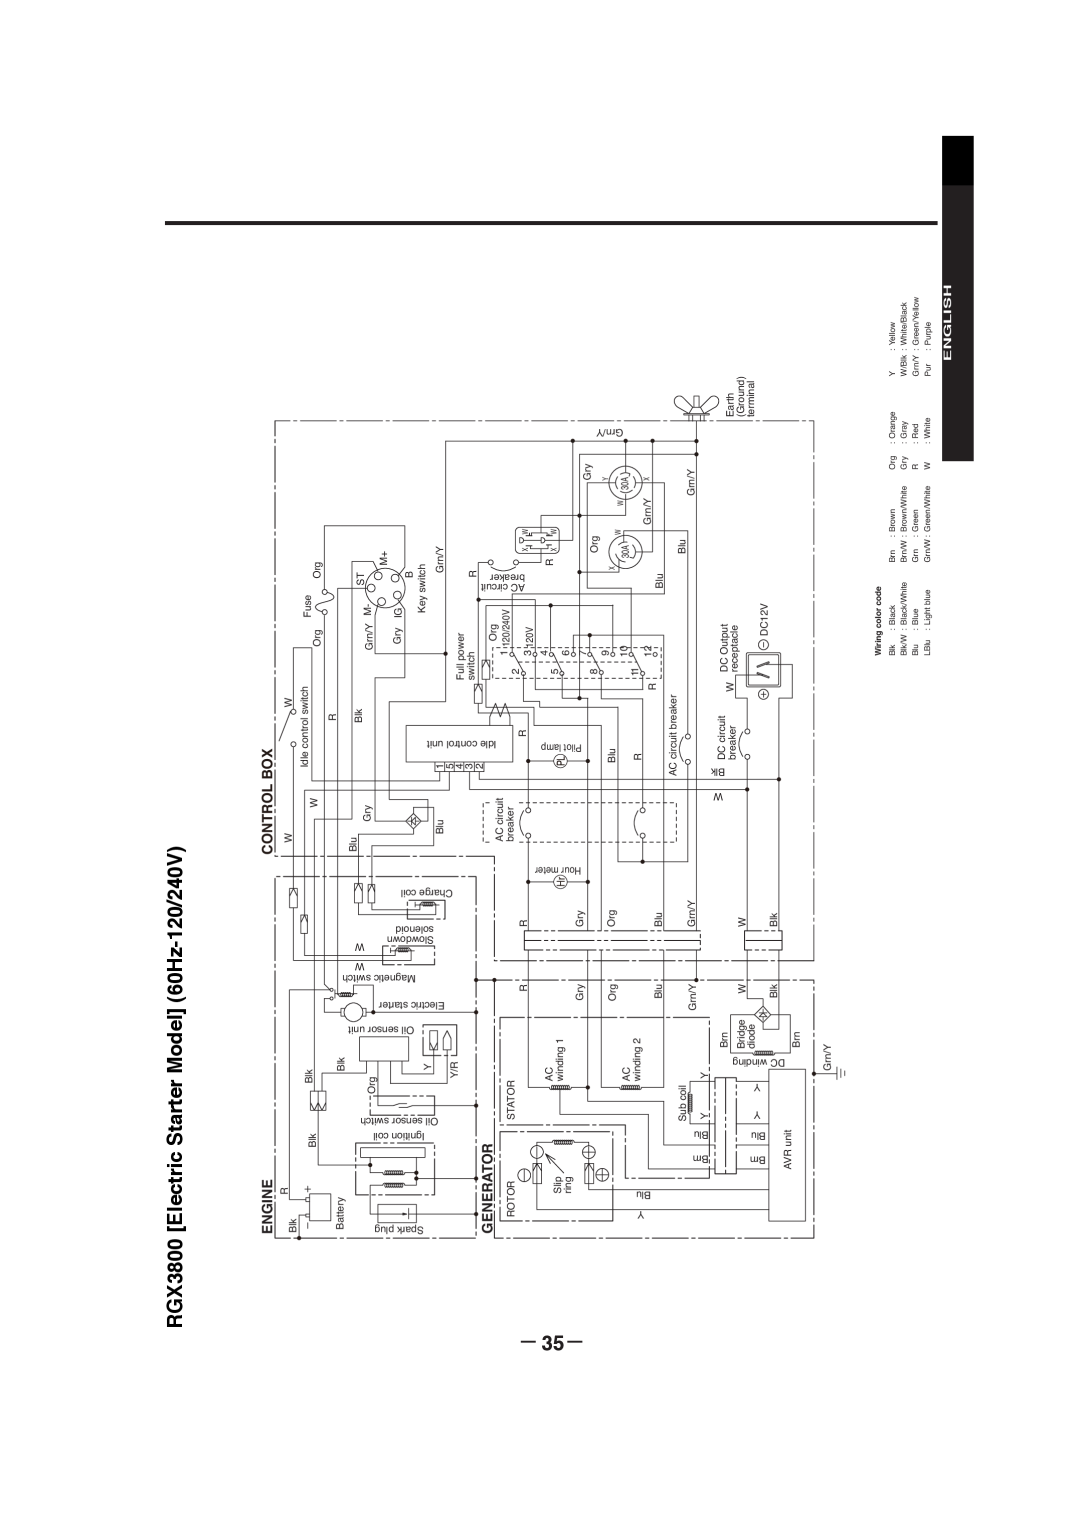 Subaru RGX7800, RGX3000 manual RGX3800 Electric Starter Model 60Hz-120/240V, English, Engine, Control Box, Generator, －－35 